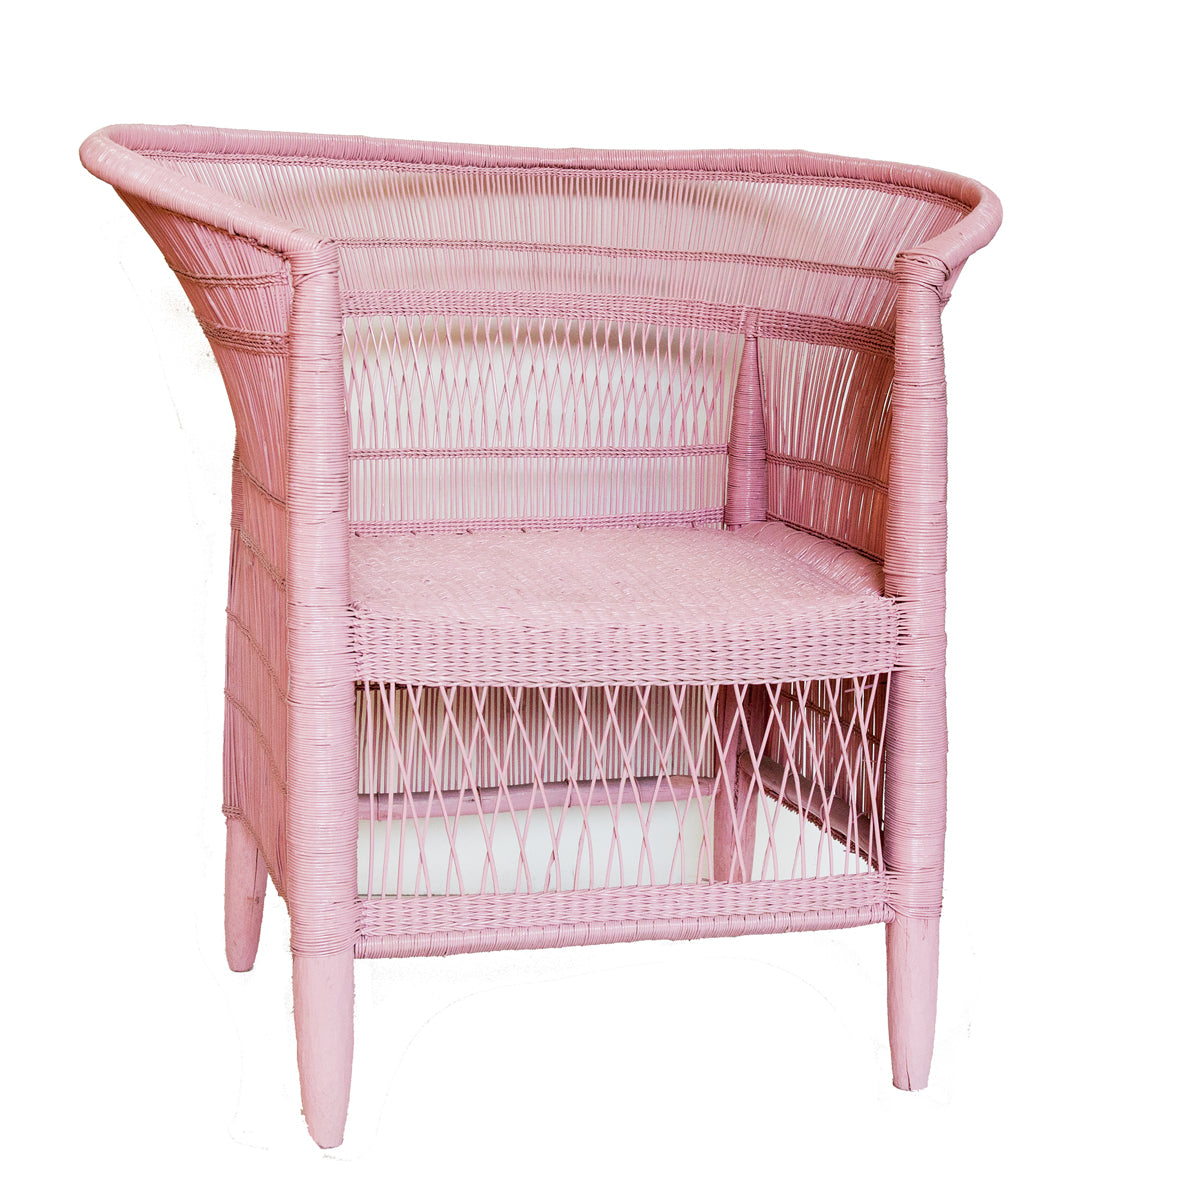 Malawi Chair - Pink AN4667